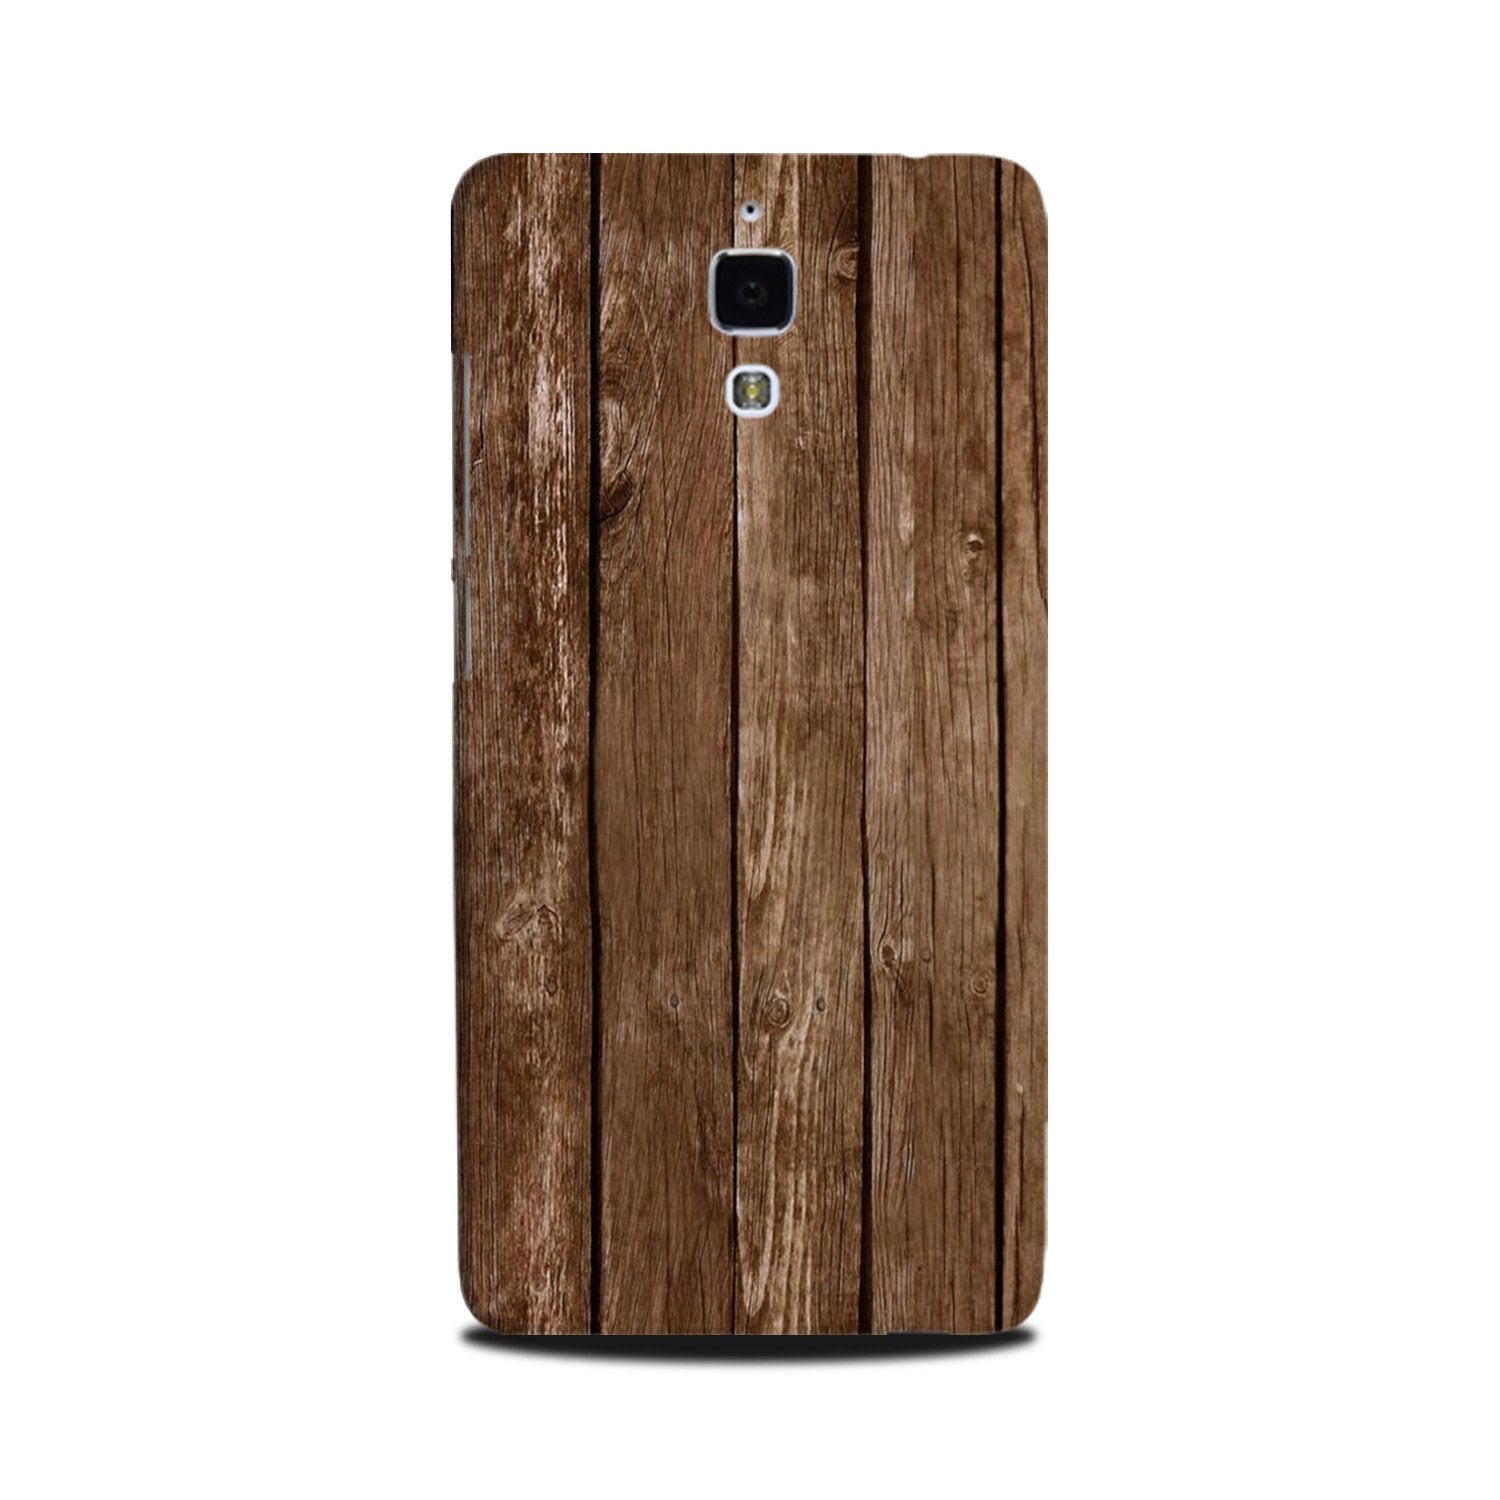 Wooden Look Case for Mi 4(Design - 112)